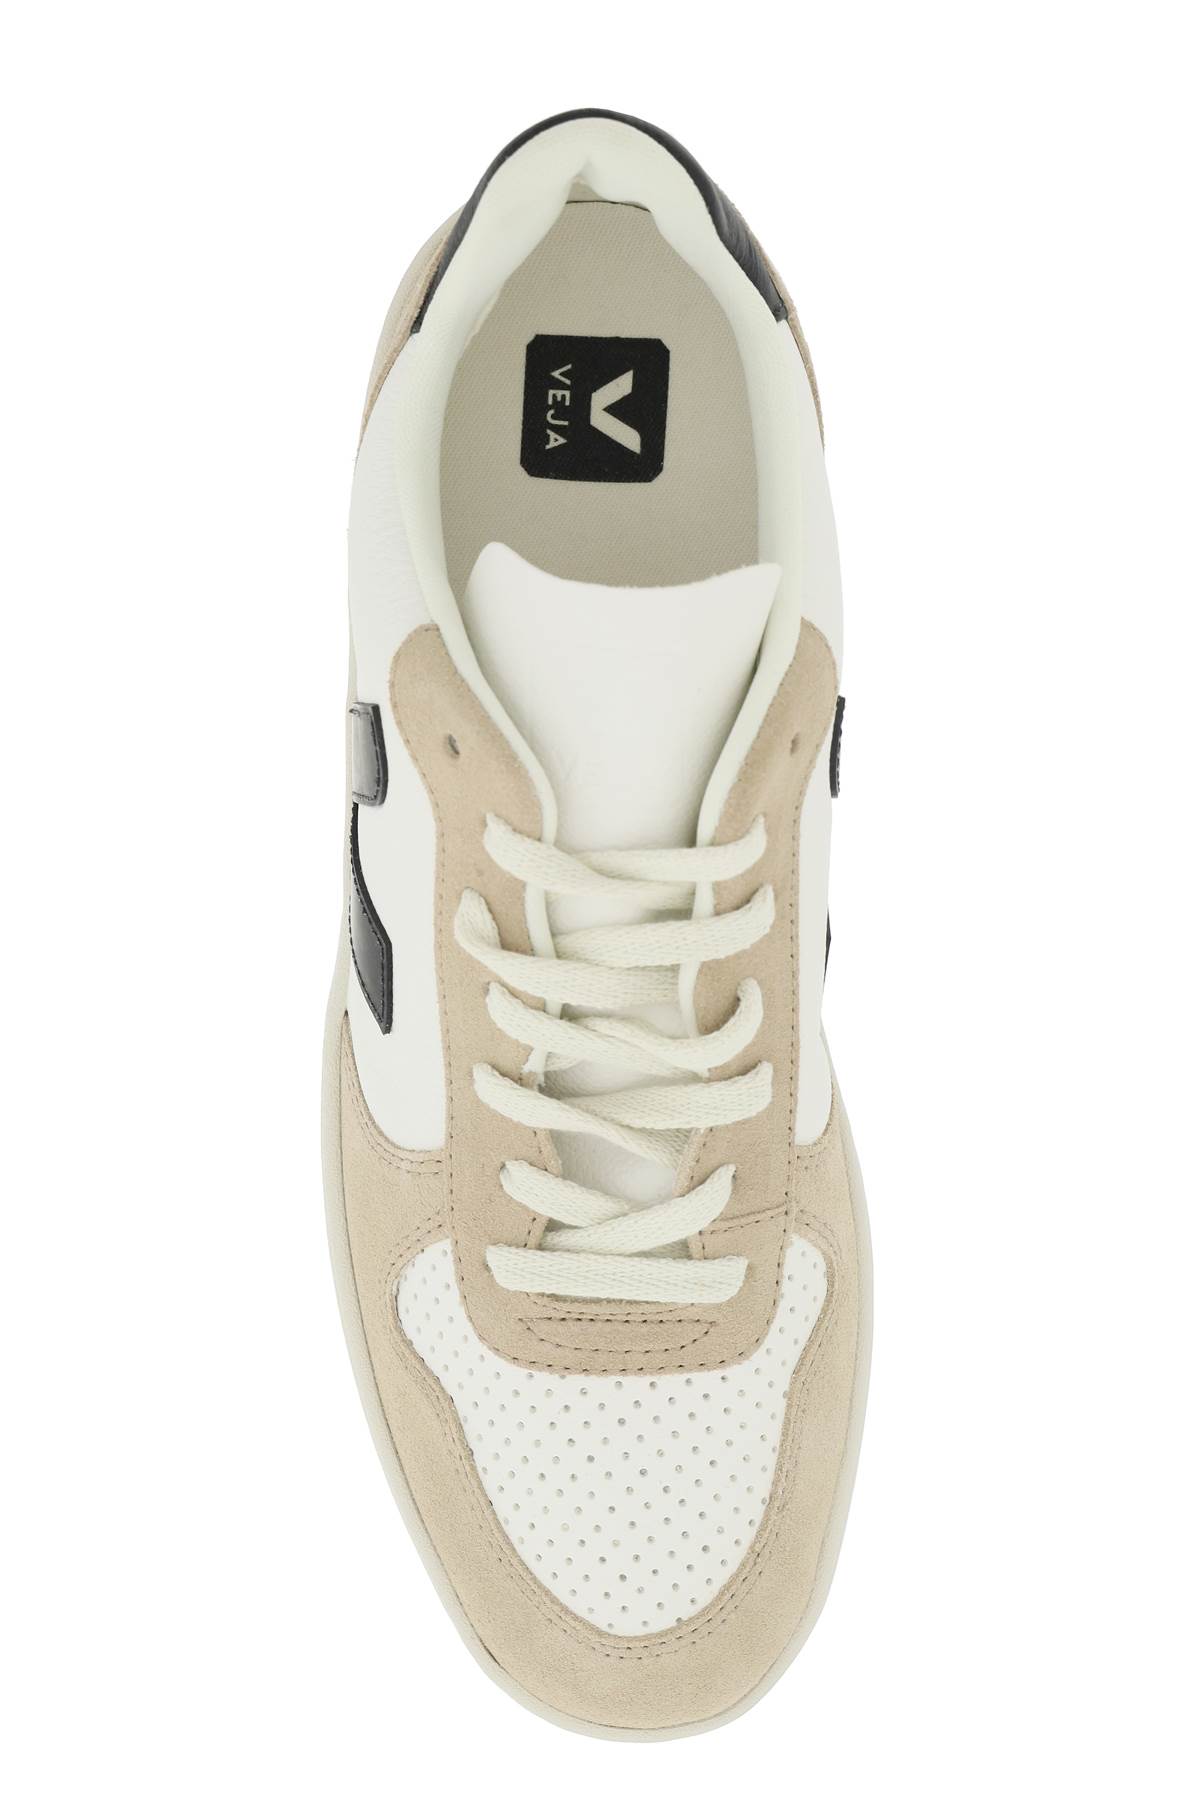 Shop Veja V-10 Suede Sneakers In Extra White Black Sahara (beige)